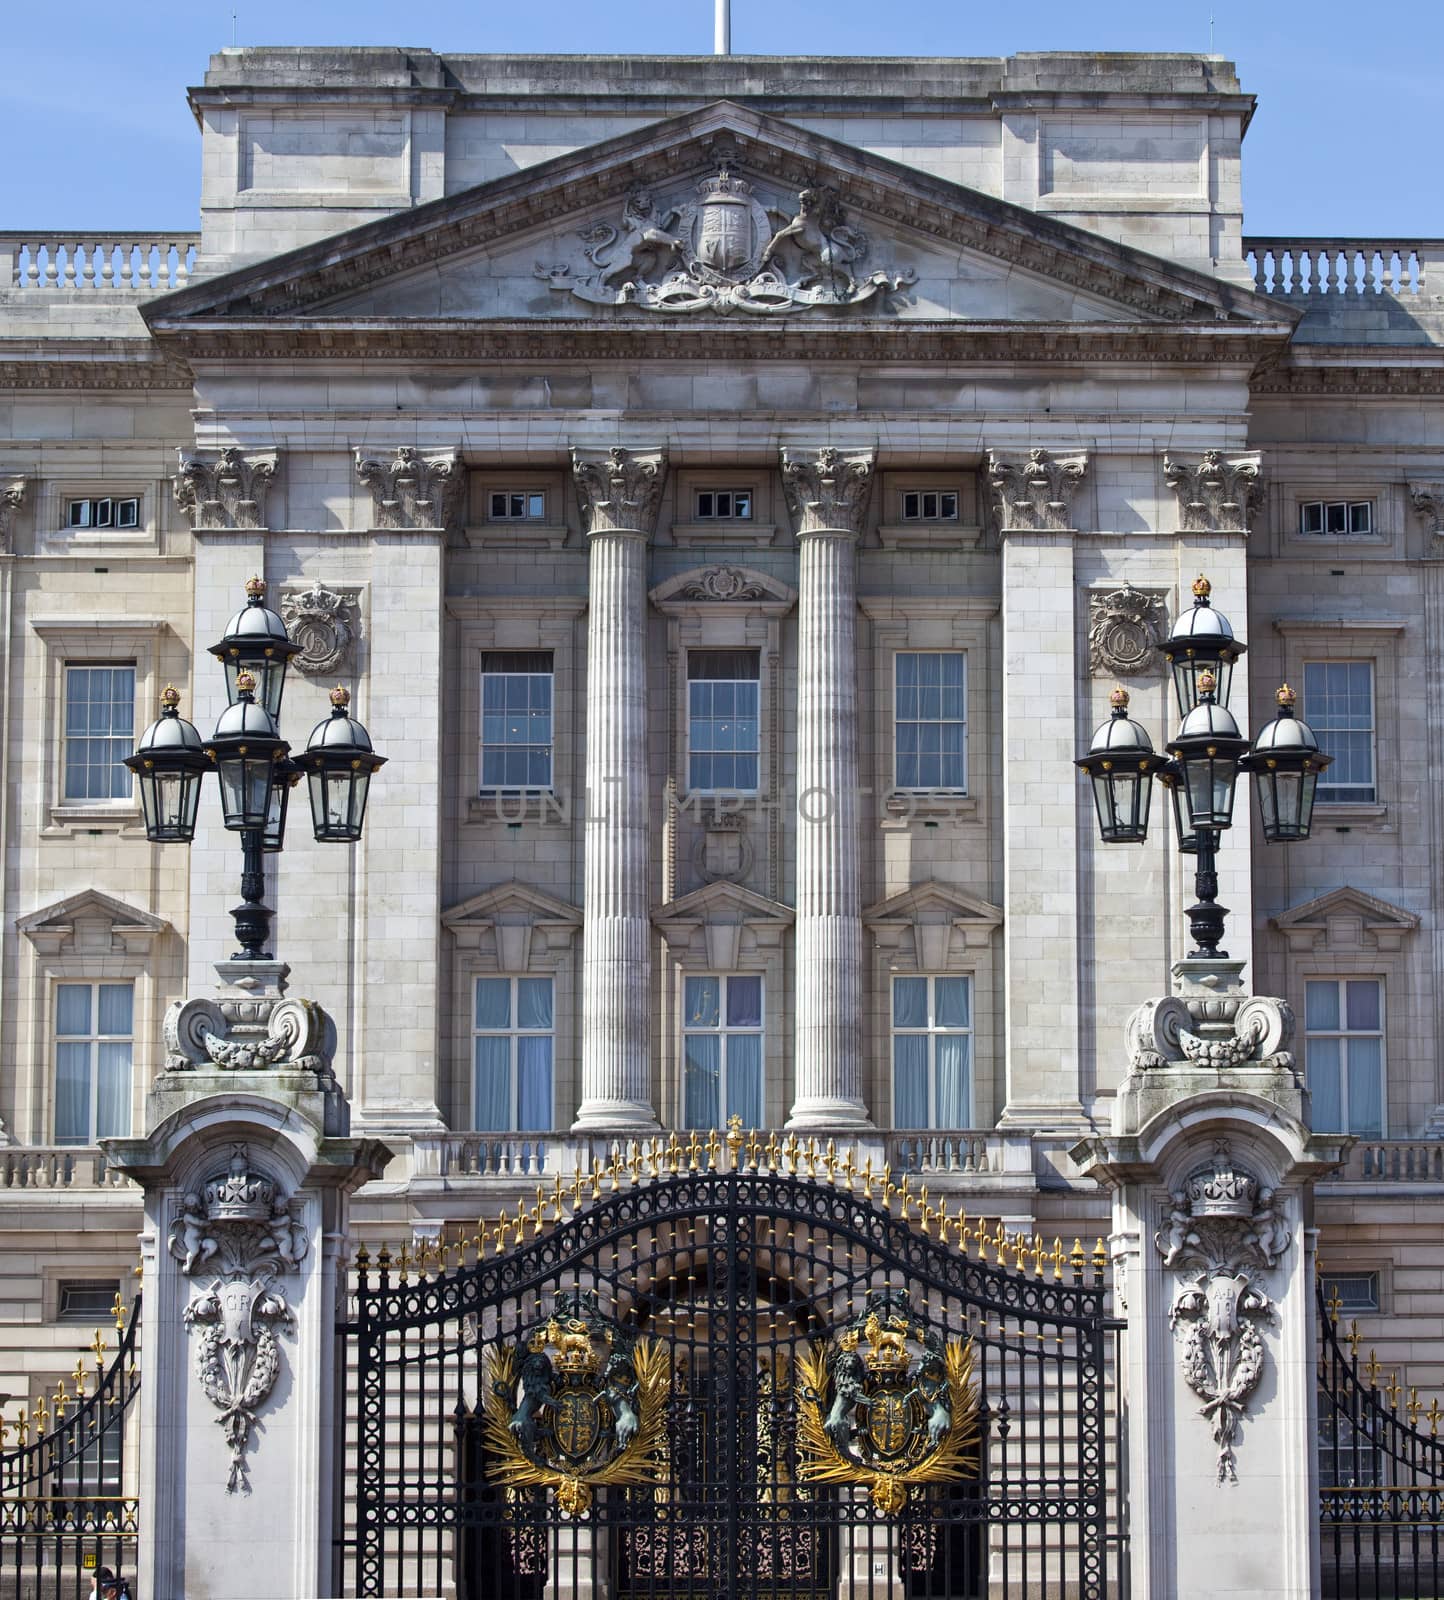 Buckingham Palace in London.